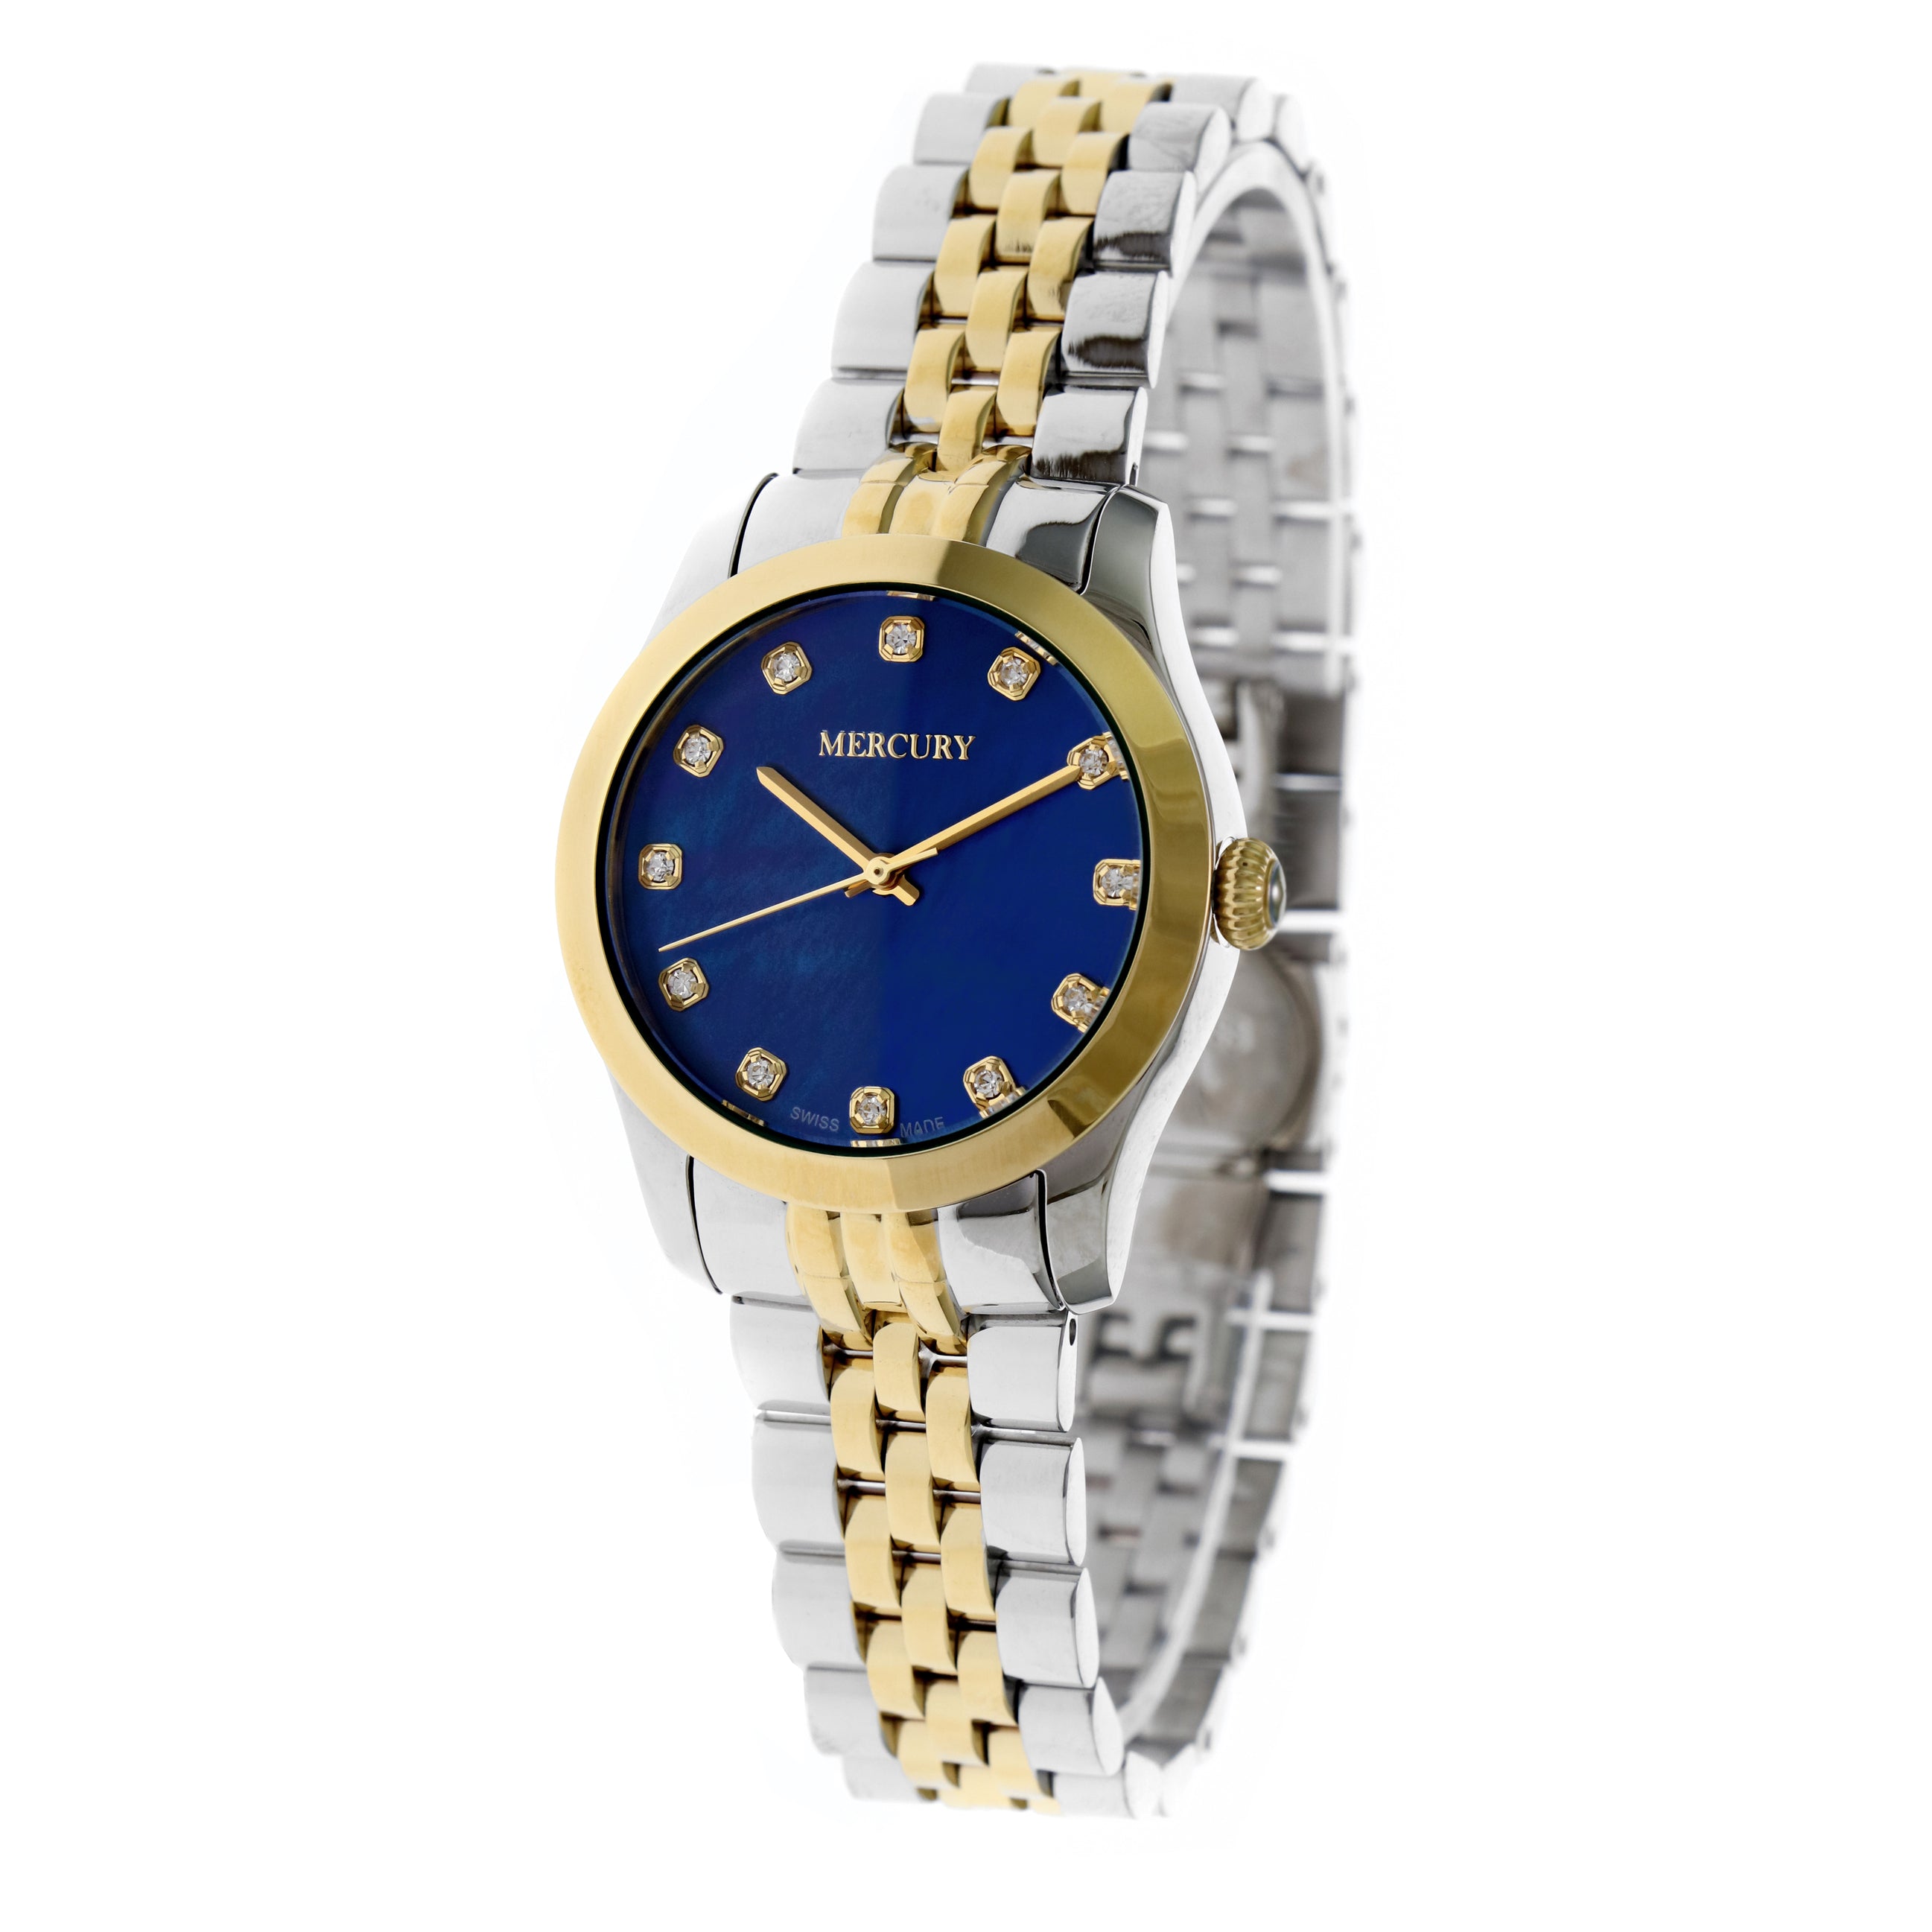 Mercury Women's Swiss Quartz Watch with Blue Dial - MER-0025